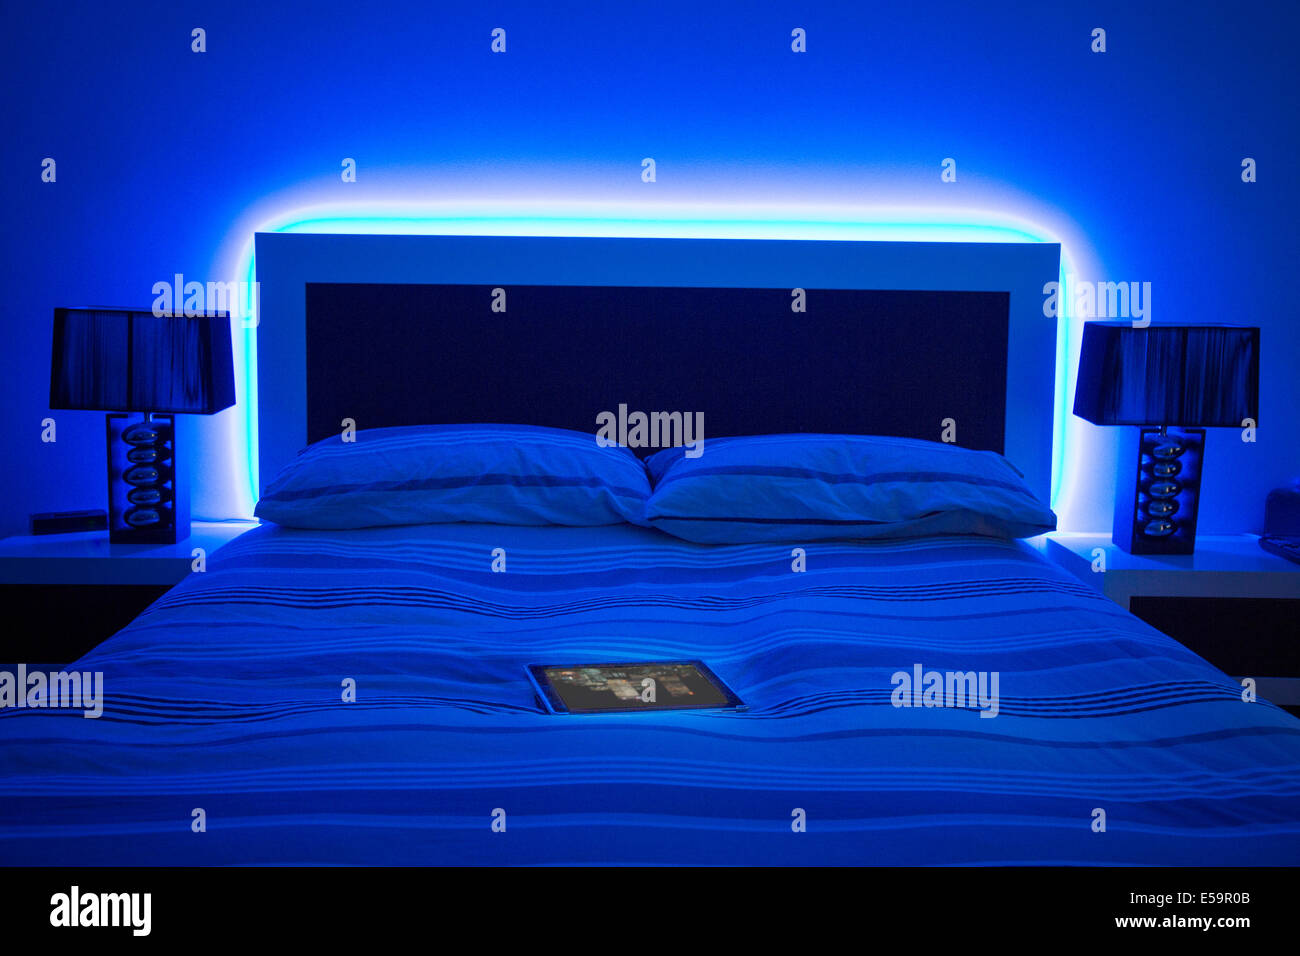 Digital-Tablette auf glühenden Bett Stockfoto